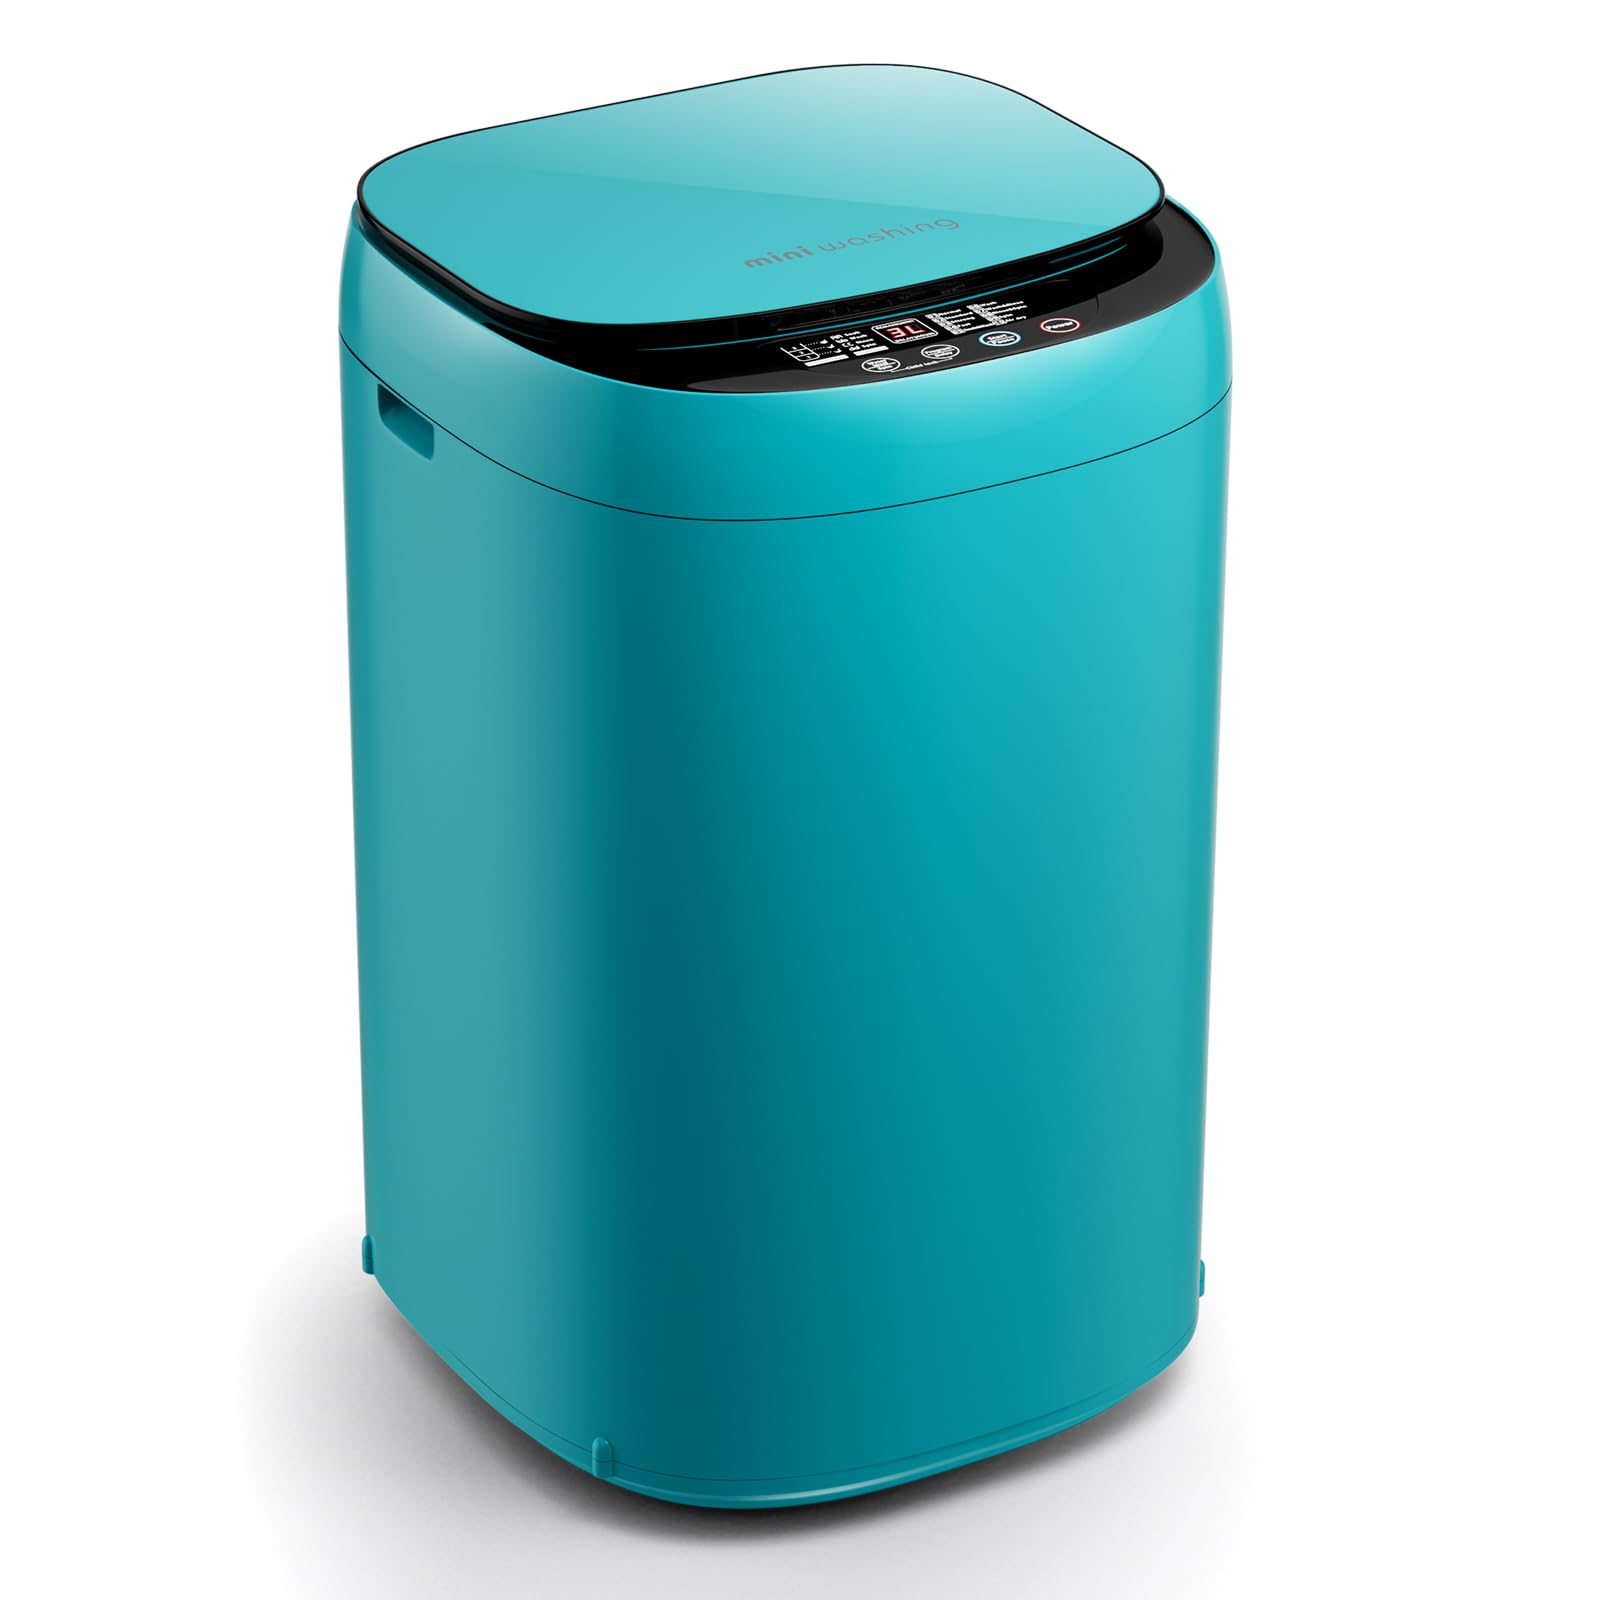 Giantex Portable Washing Machine, Turquoise & Black